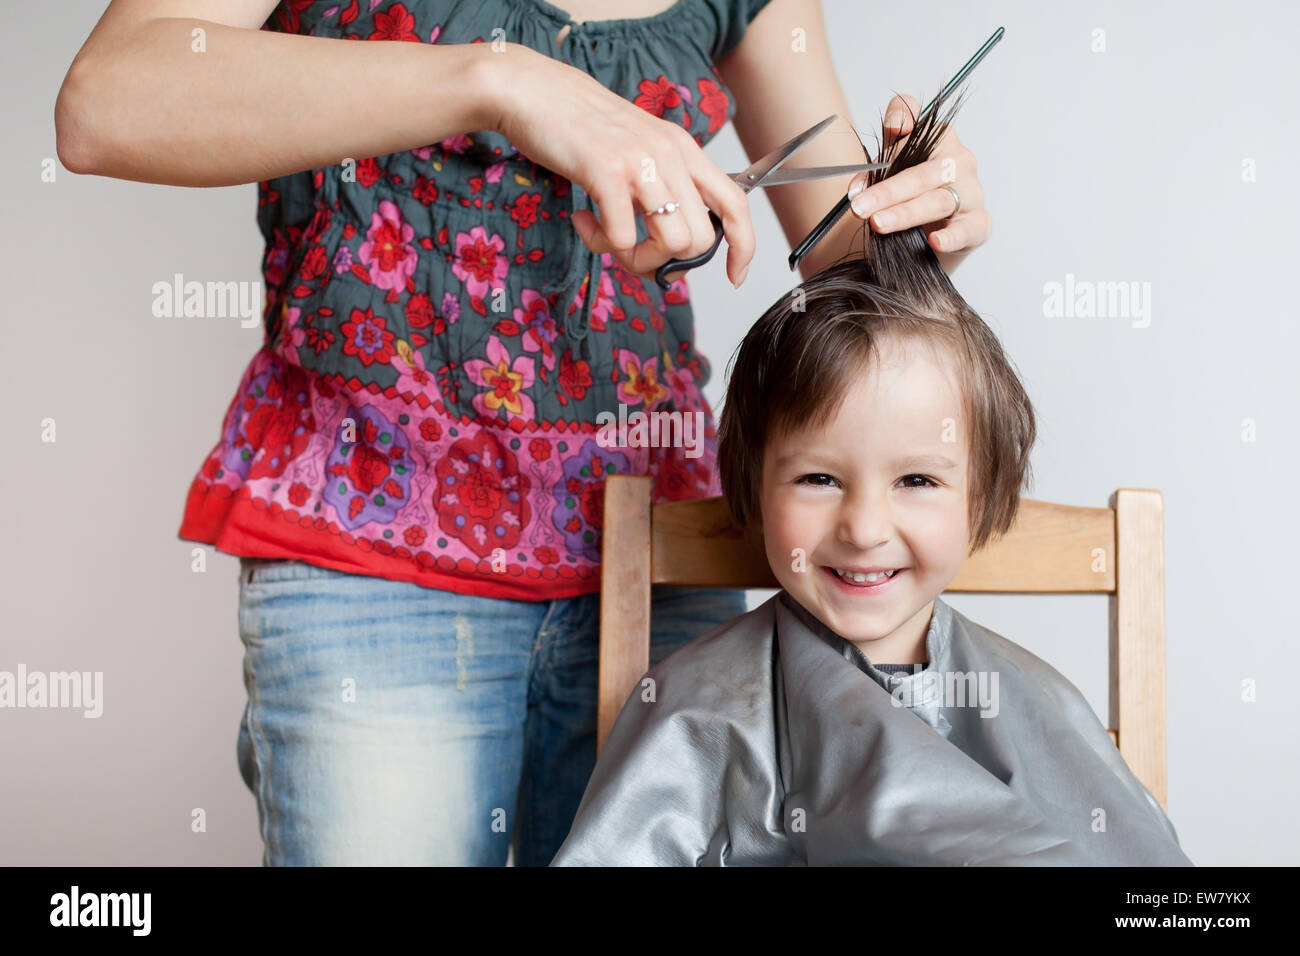 Barber Haircut Child Stock Photos Barber Haircut Child Stock